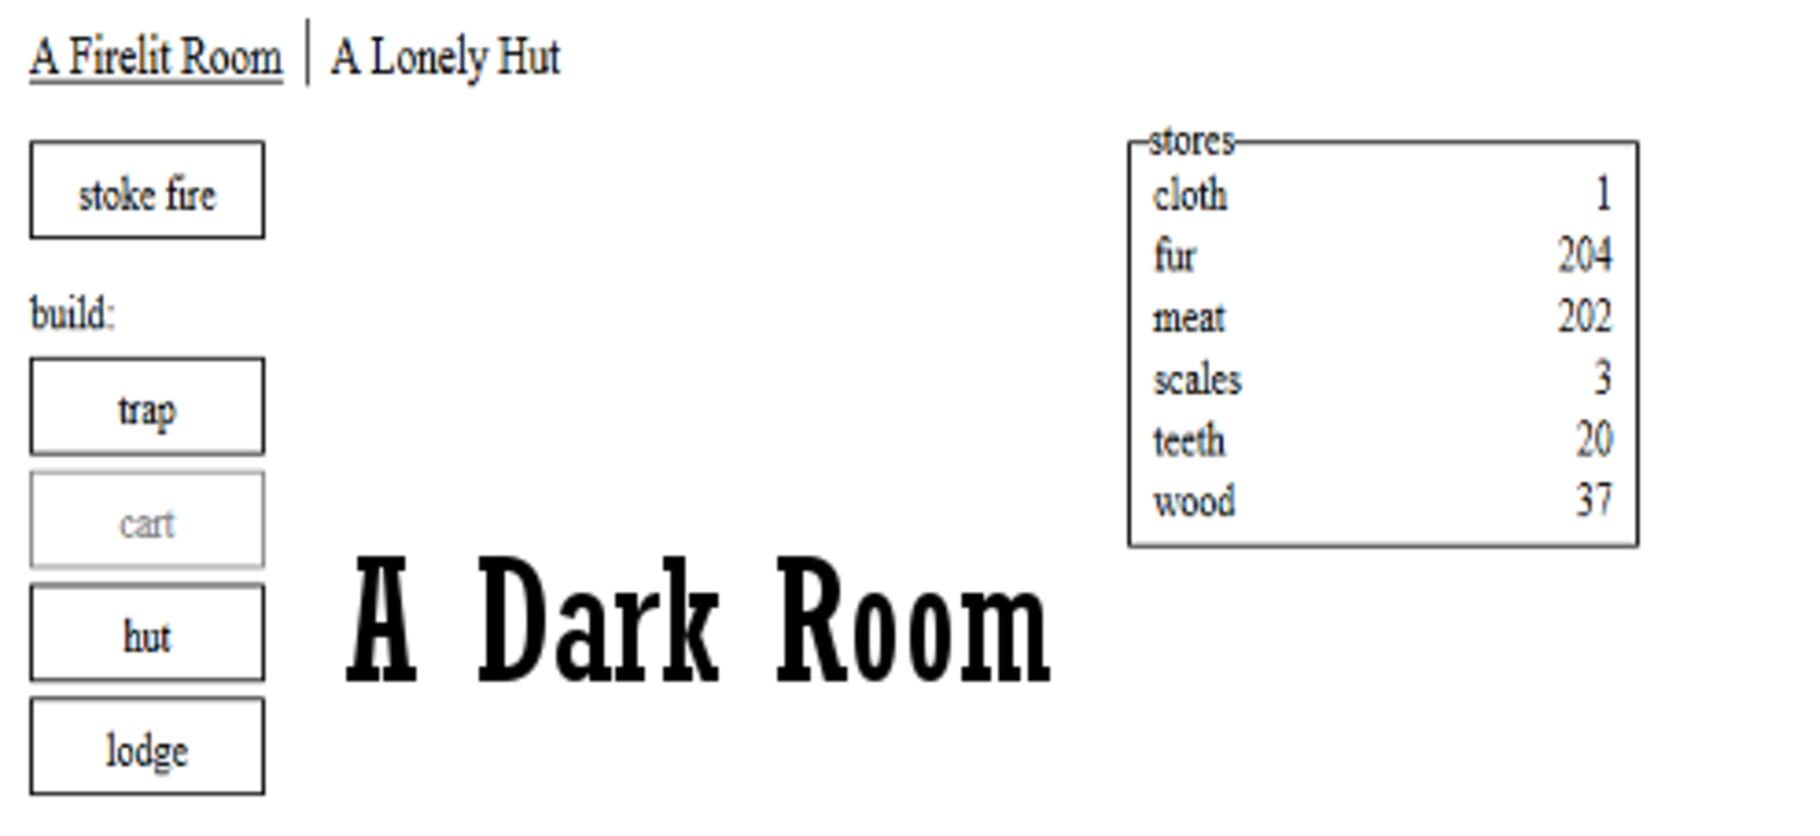 A Dark Room screenshot